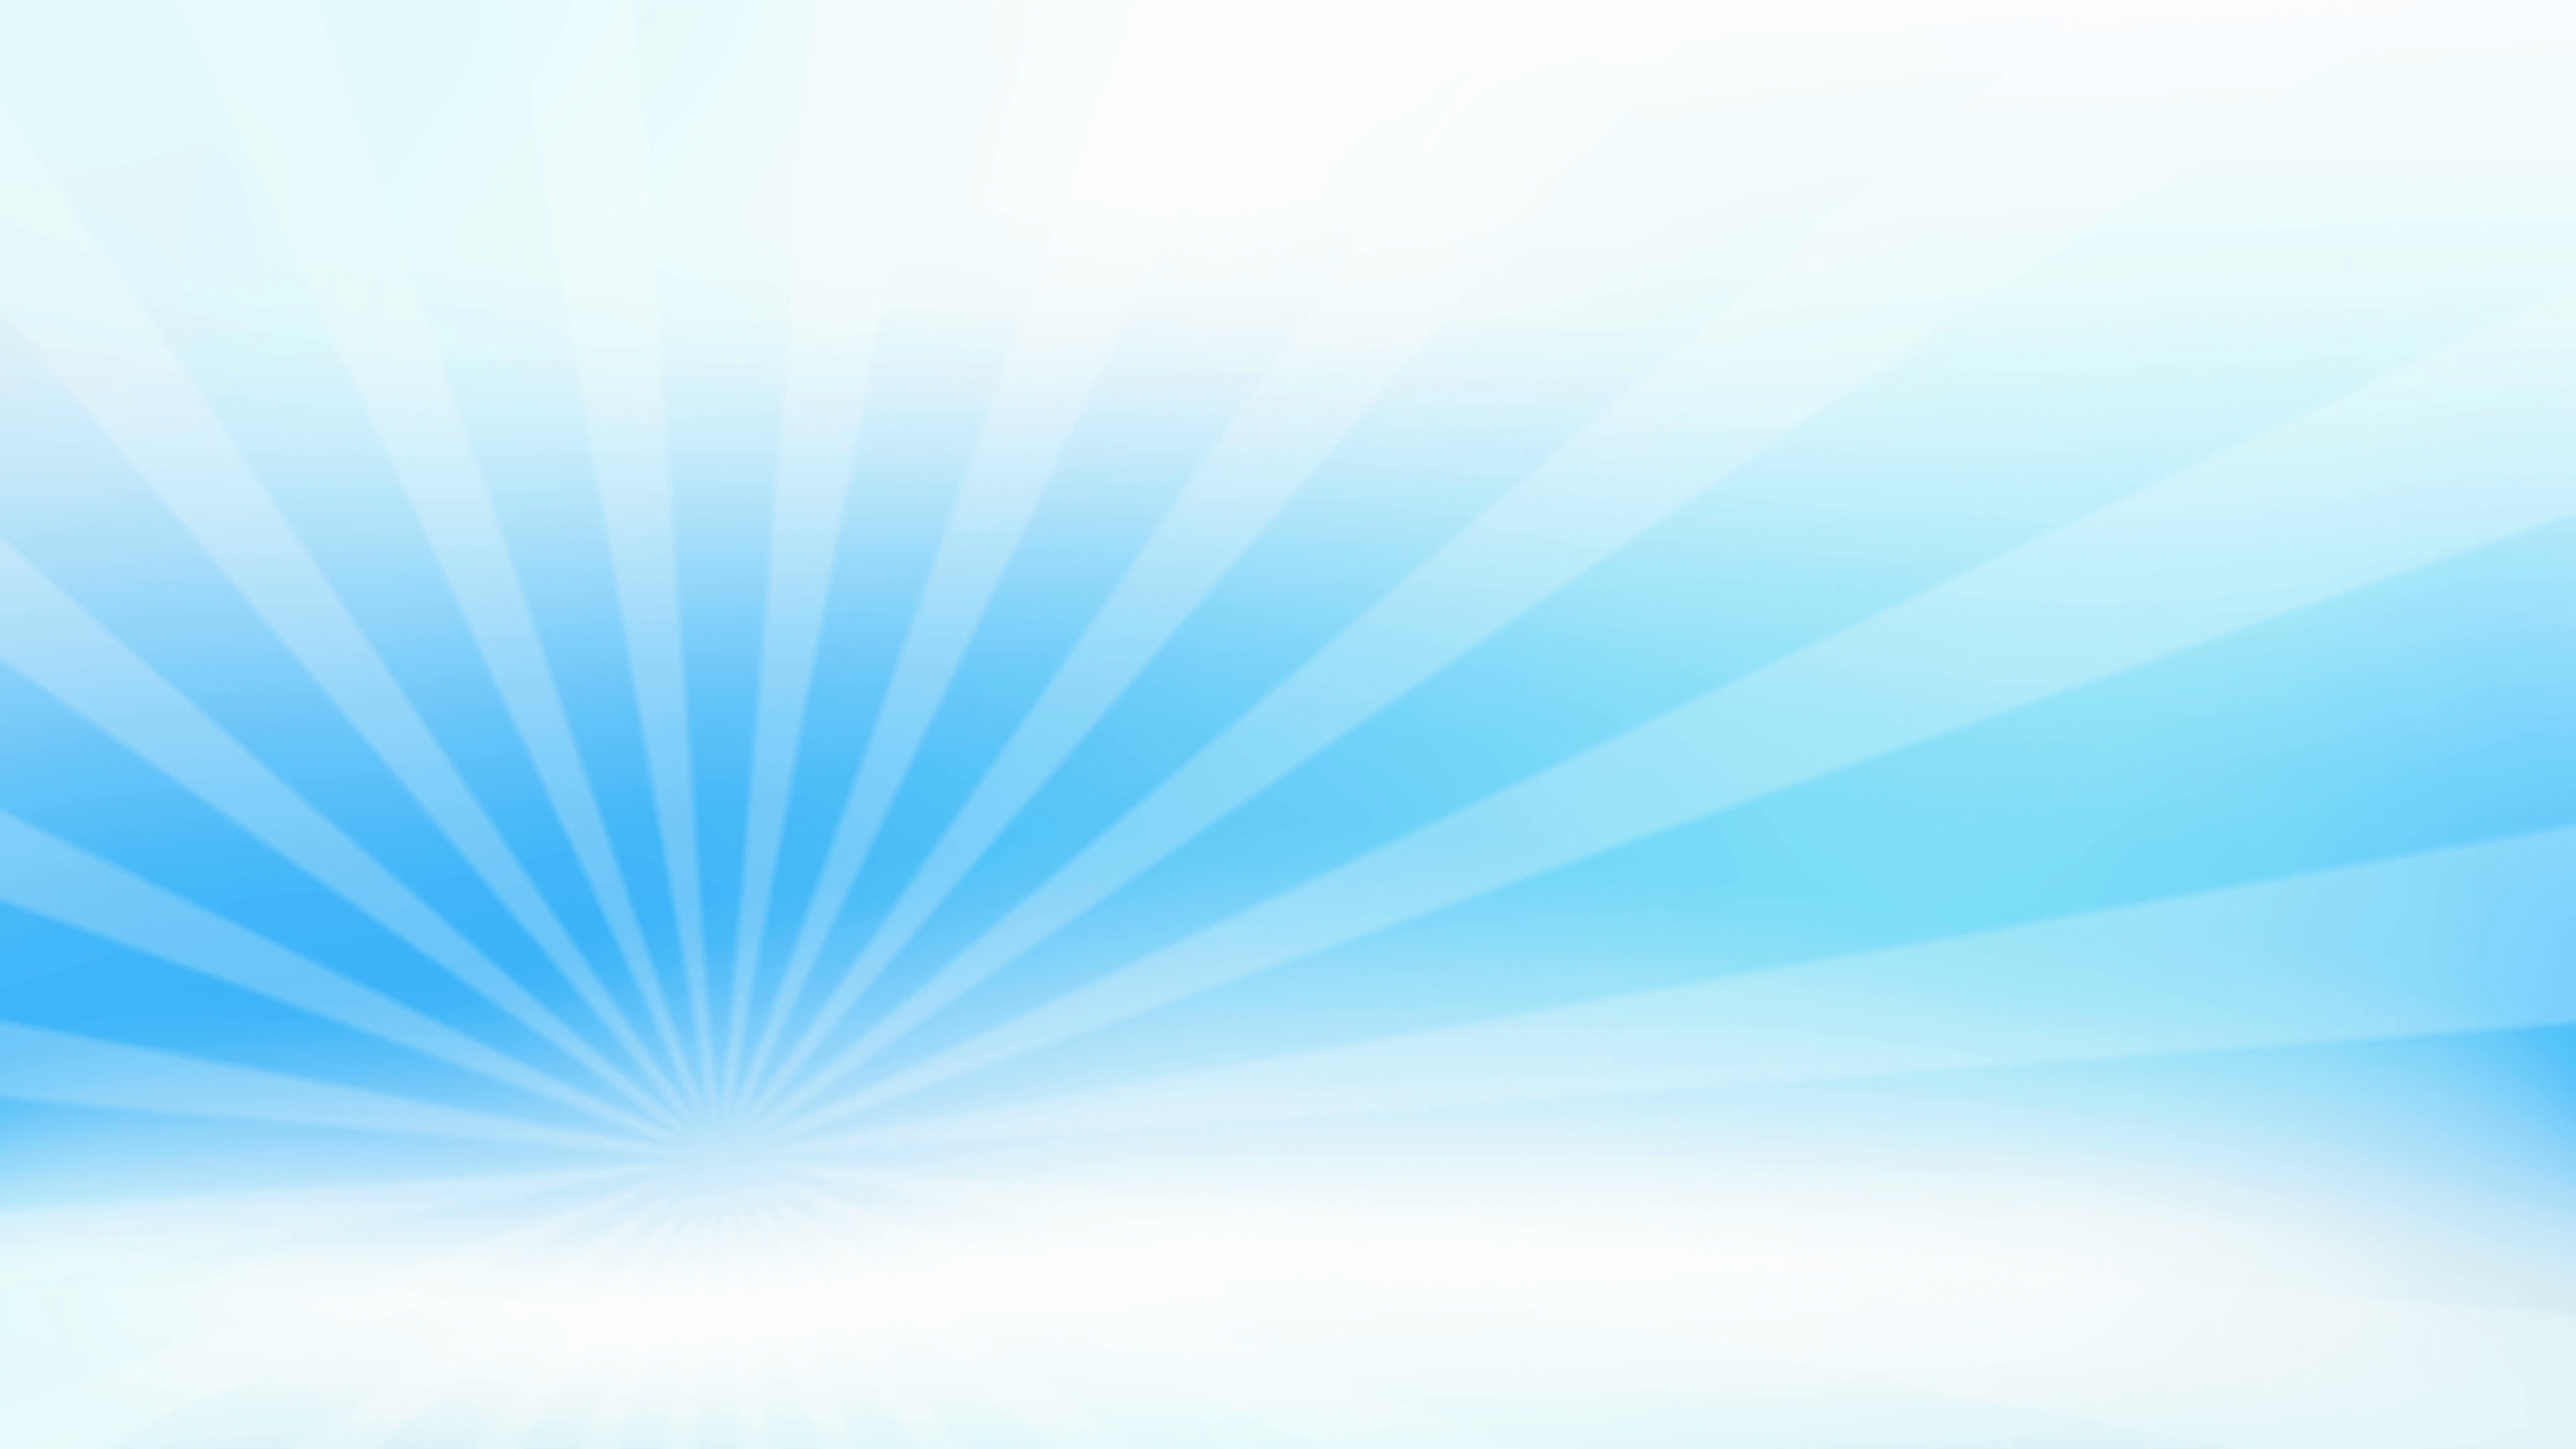 Abstract sunburst on gradient blue sky background loop animation